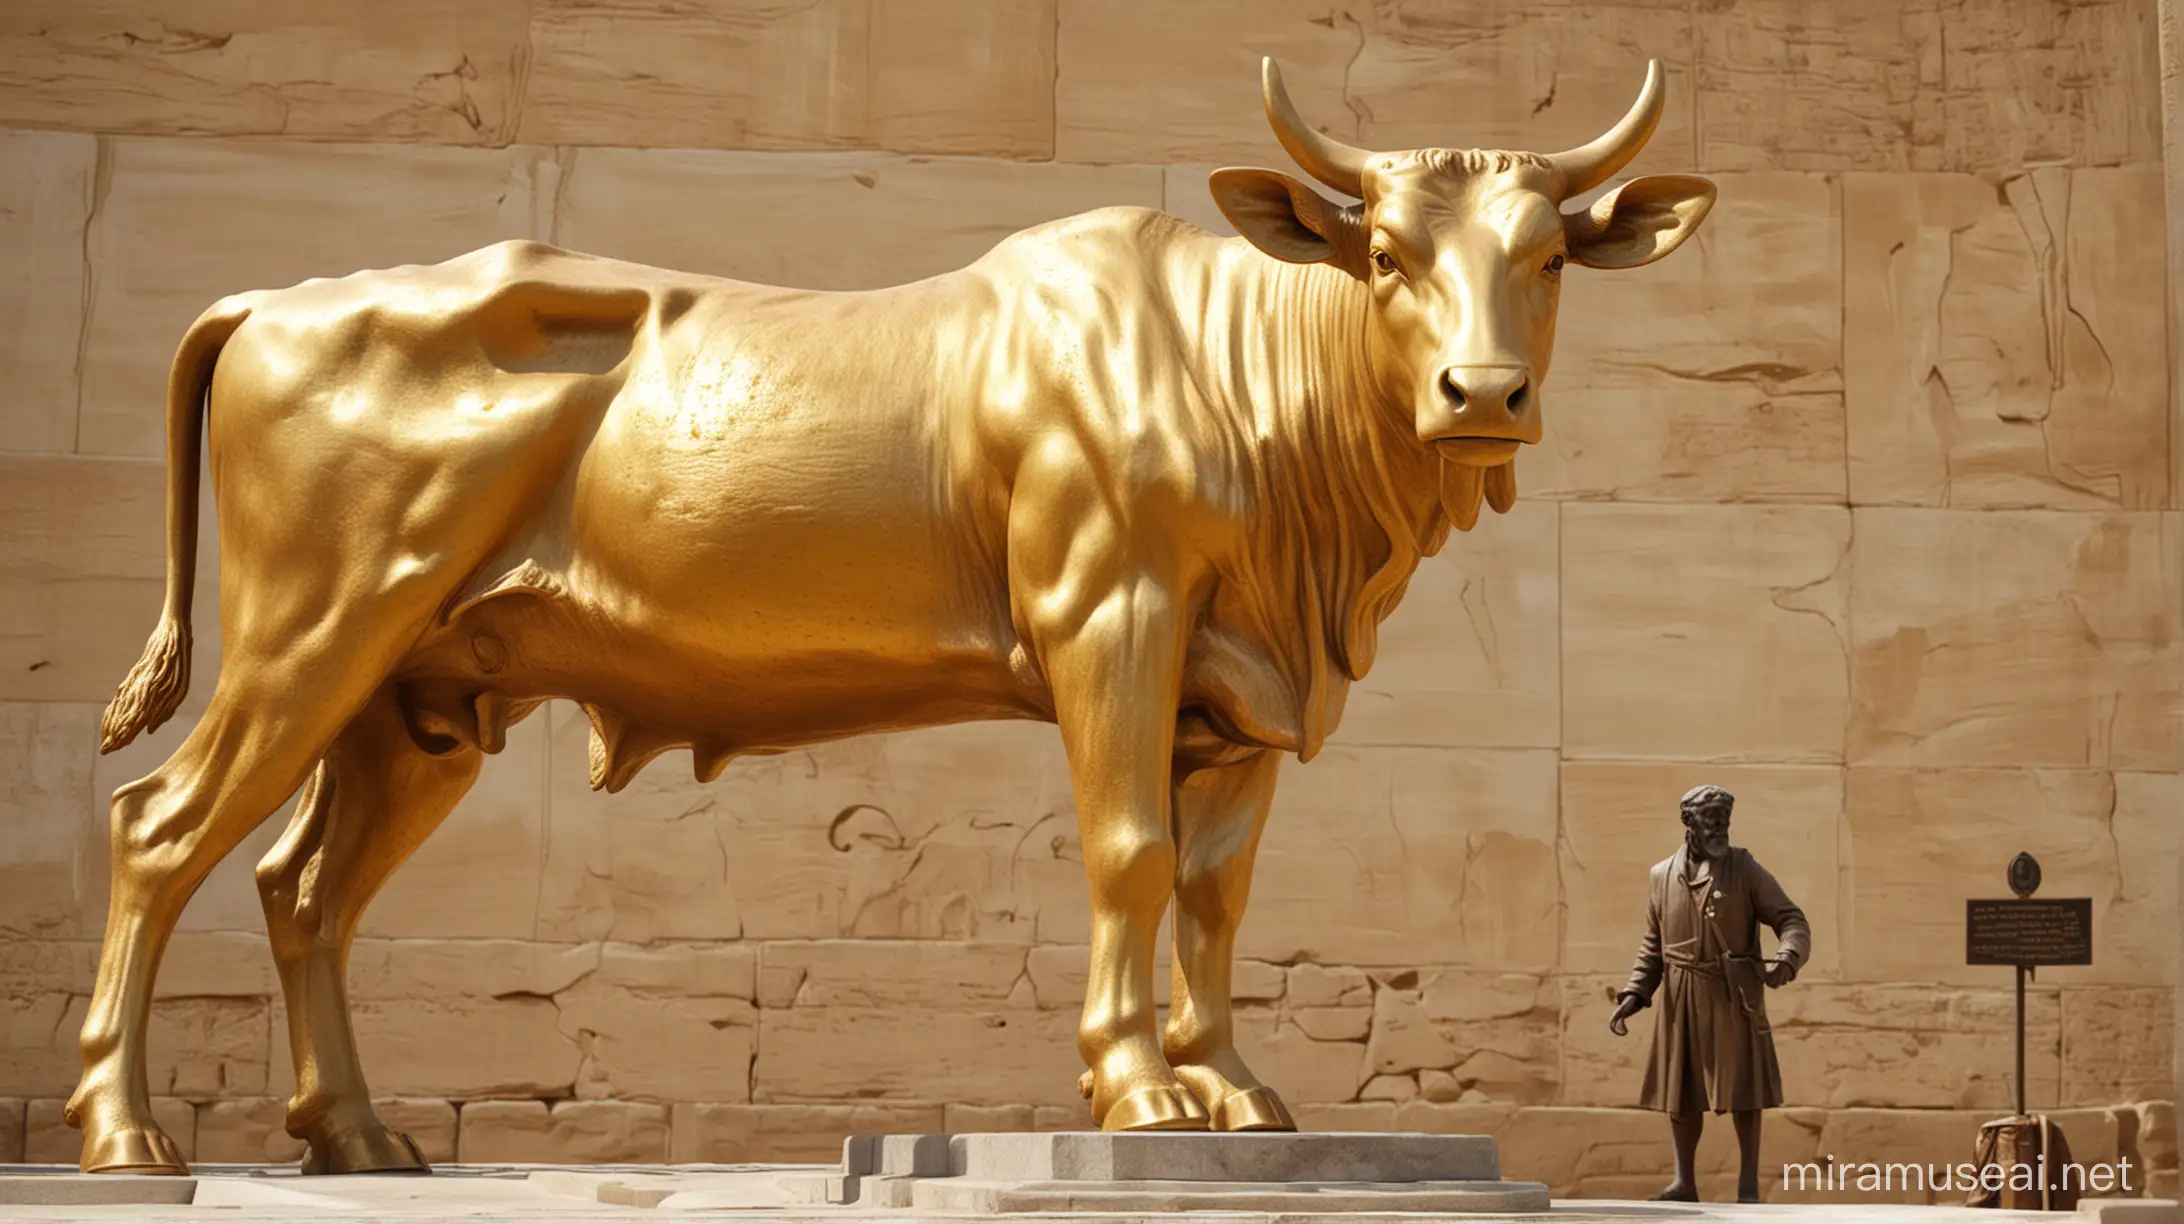 Golden Calf Statue Iconic Representation from Moses Era